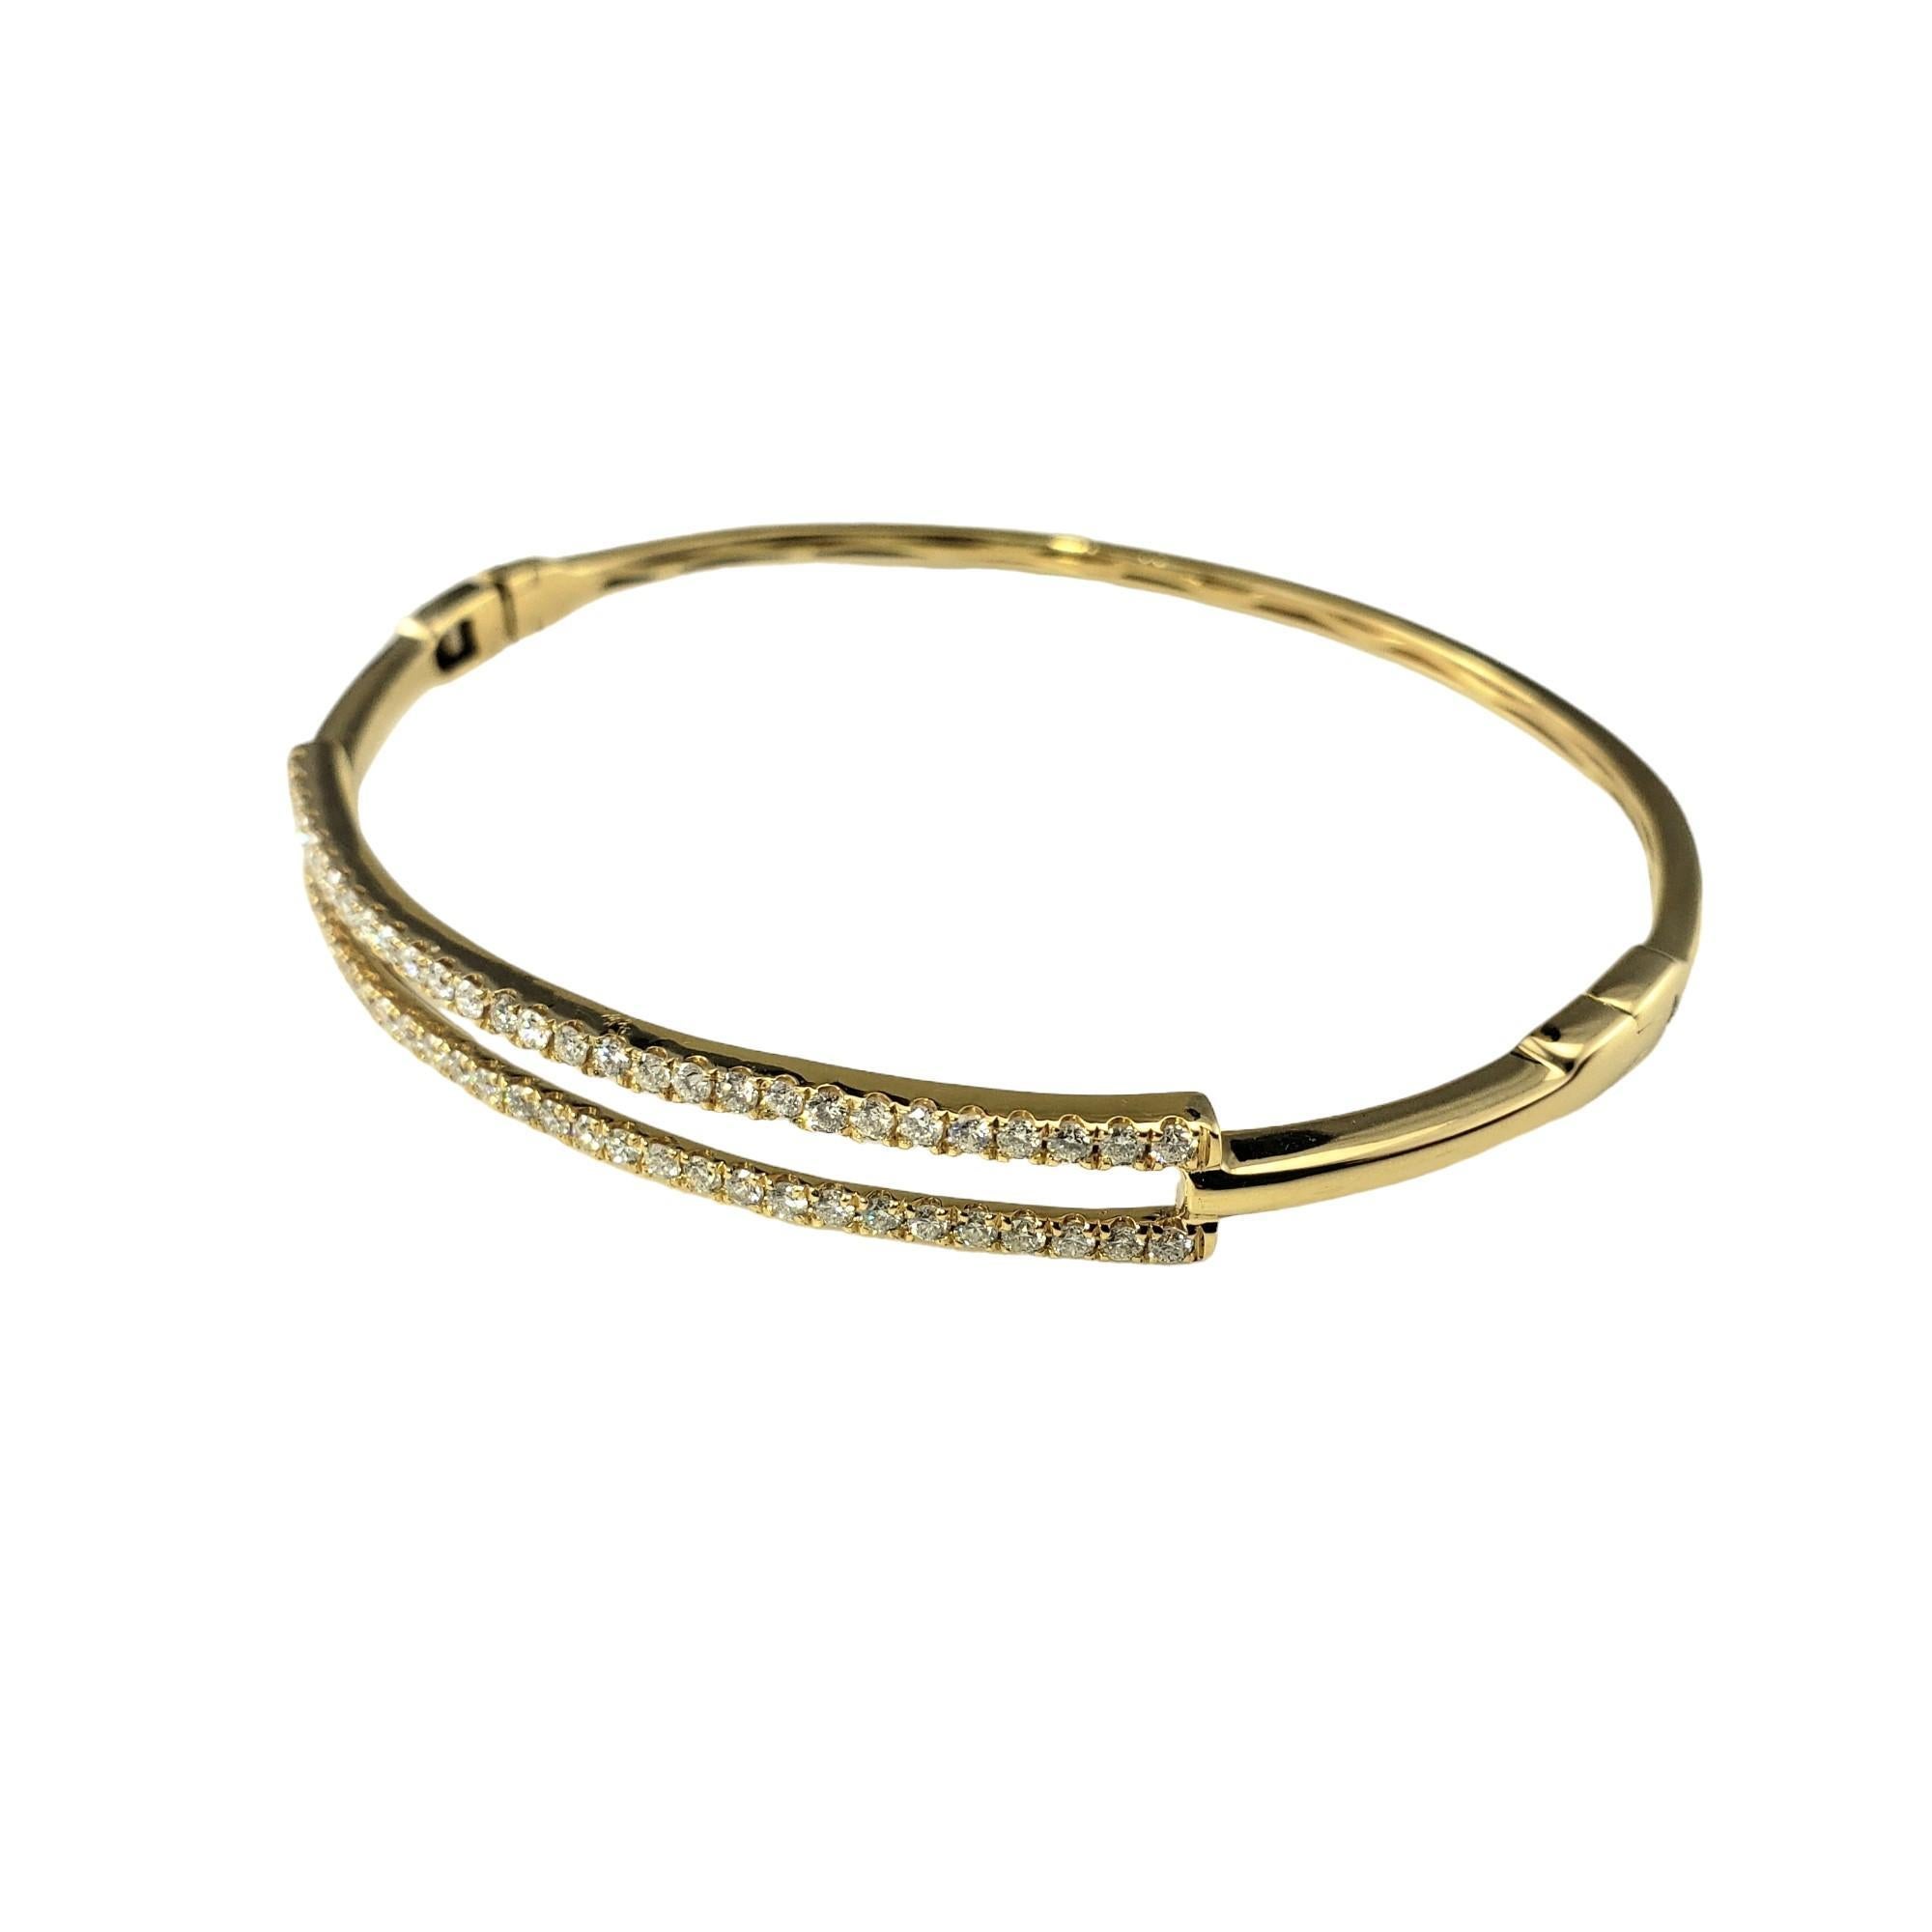 Brilliant Cut 18 Karat Yellow Gold and Double Diamond Row Bangle Bracelet #17050 For Sale